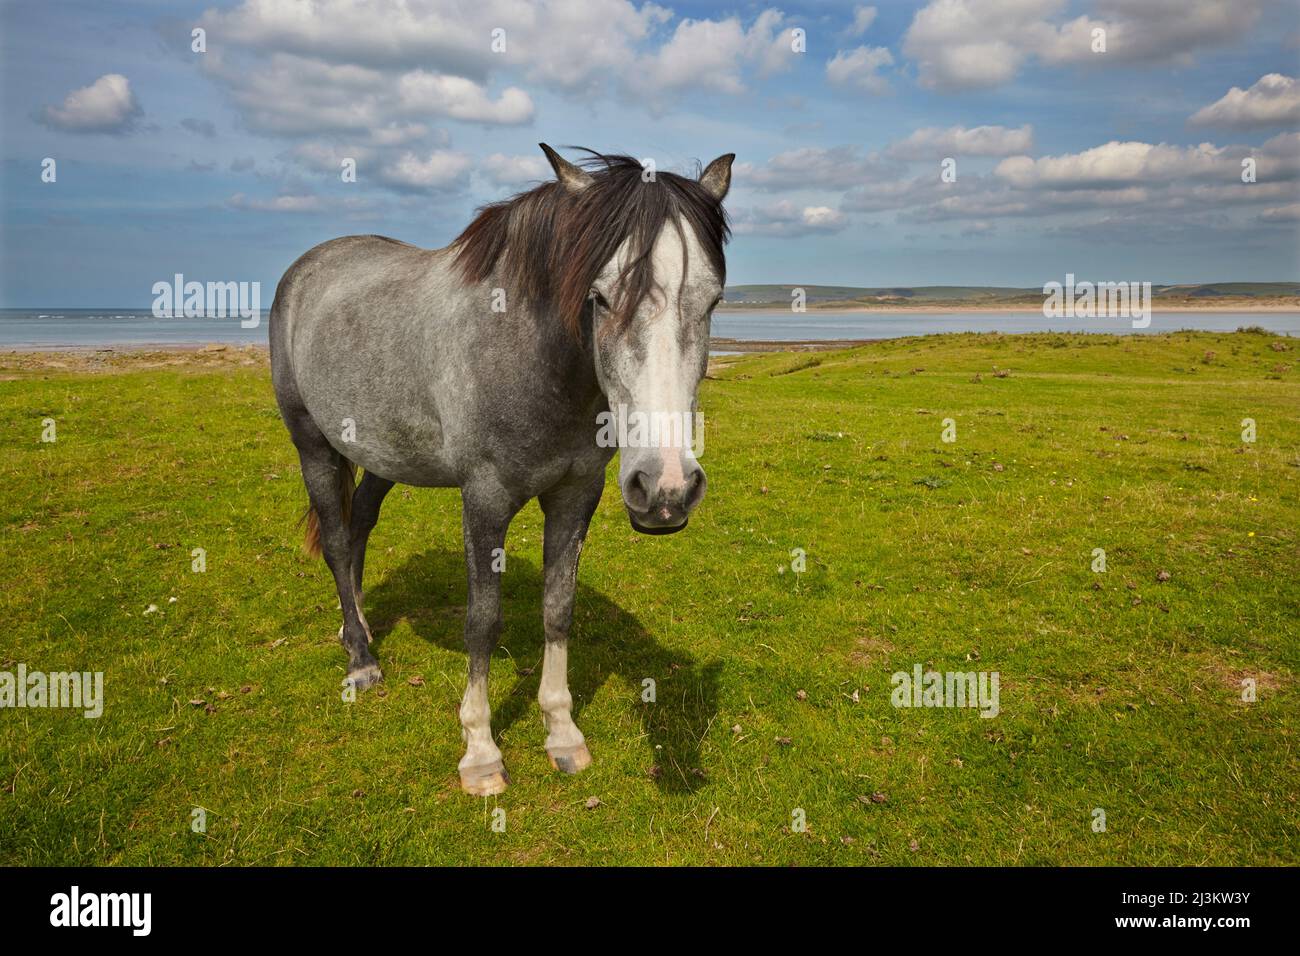 Ritratto di un cavallo su un campo di erba a Northam Burrows, Westward ho!, Devon, Gran Bretagna; Westward ho!, Devon, Inghilterra Foto Stock